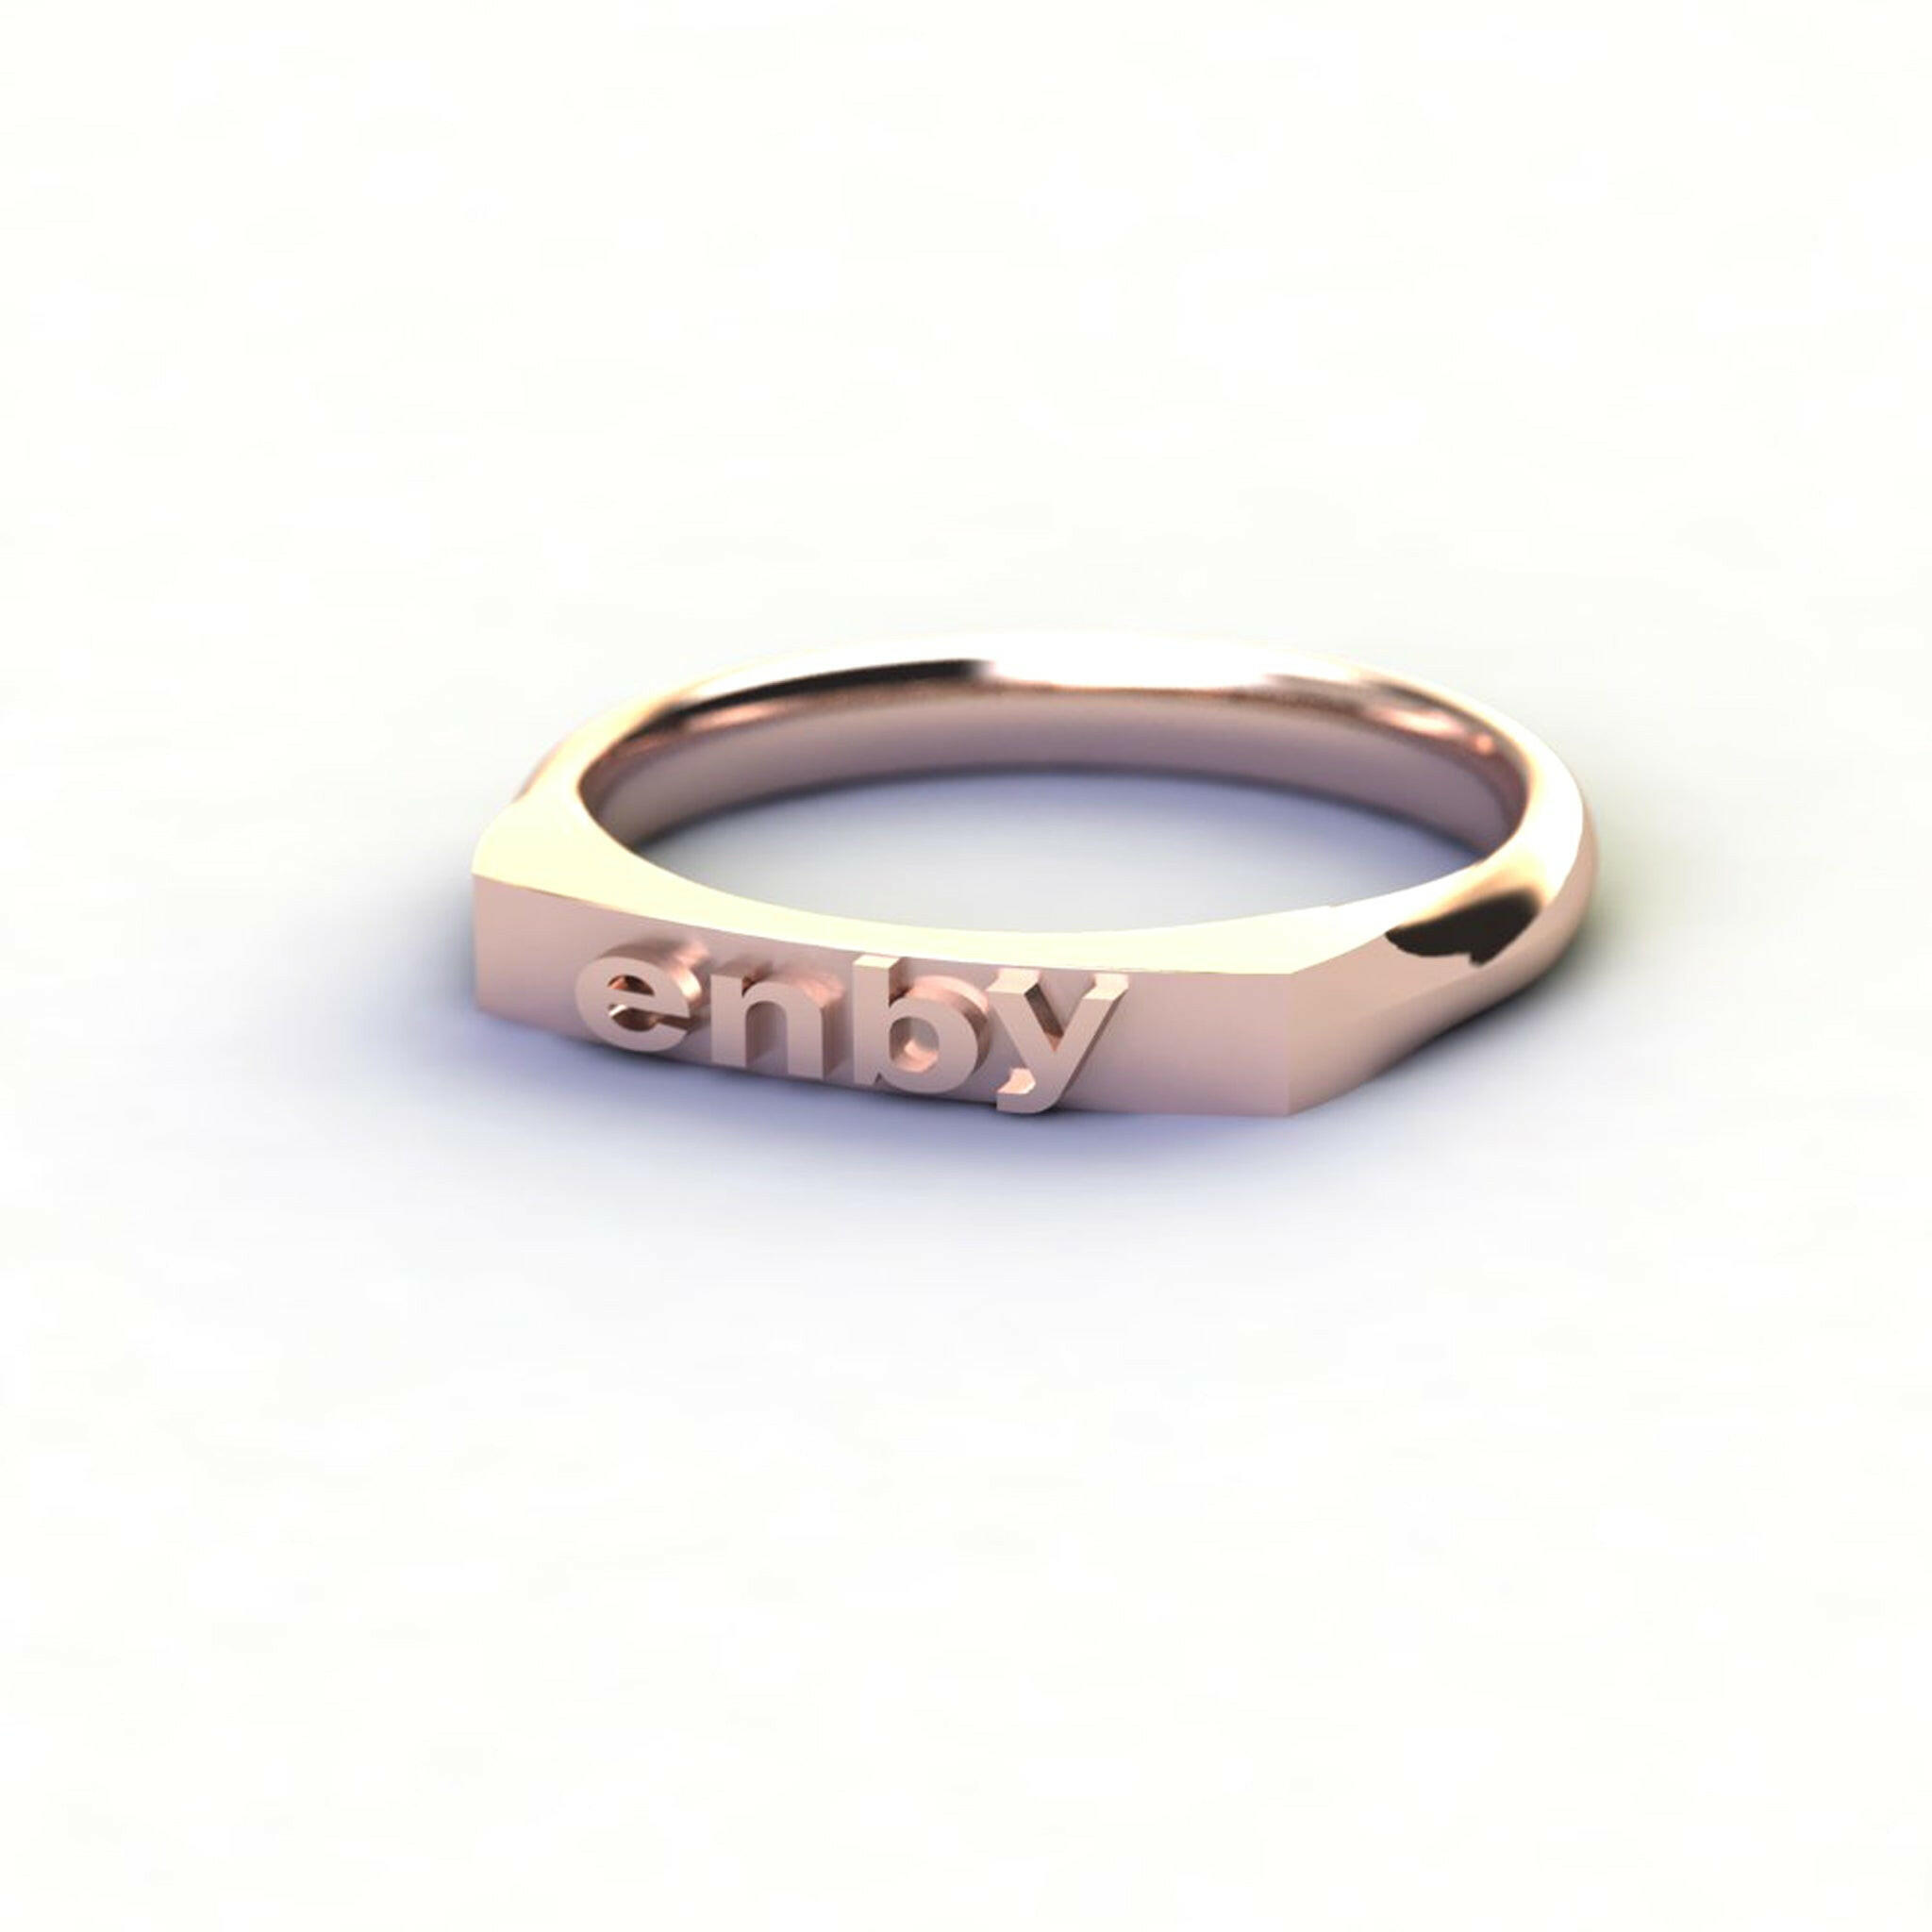 enby - Ilah Cibis Jewelry-Rings